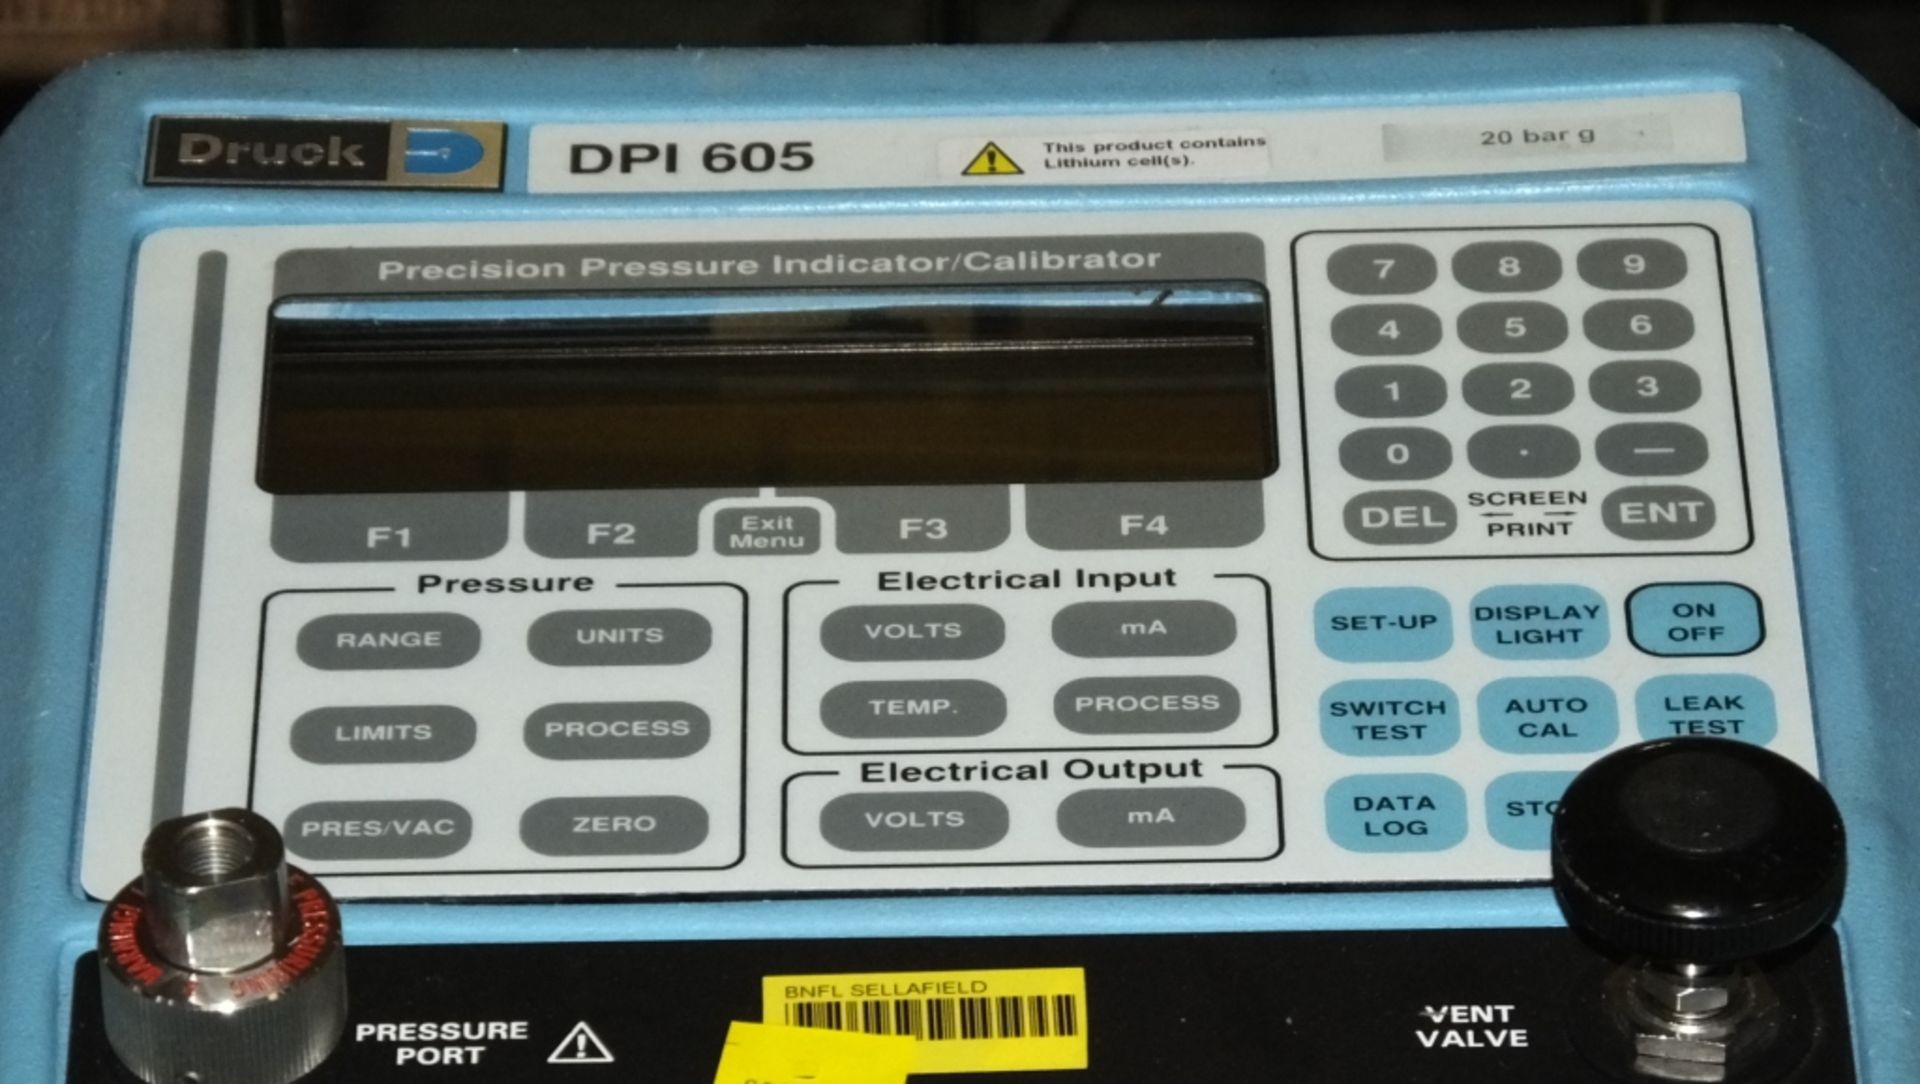 Druck DPI 605 20bar G digital pressure indicator - Bild 2 aus 2